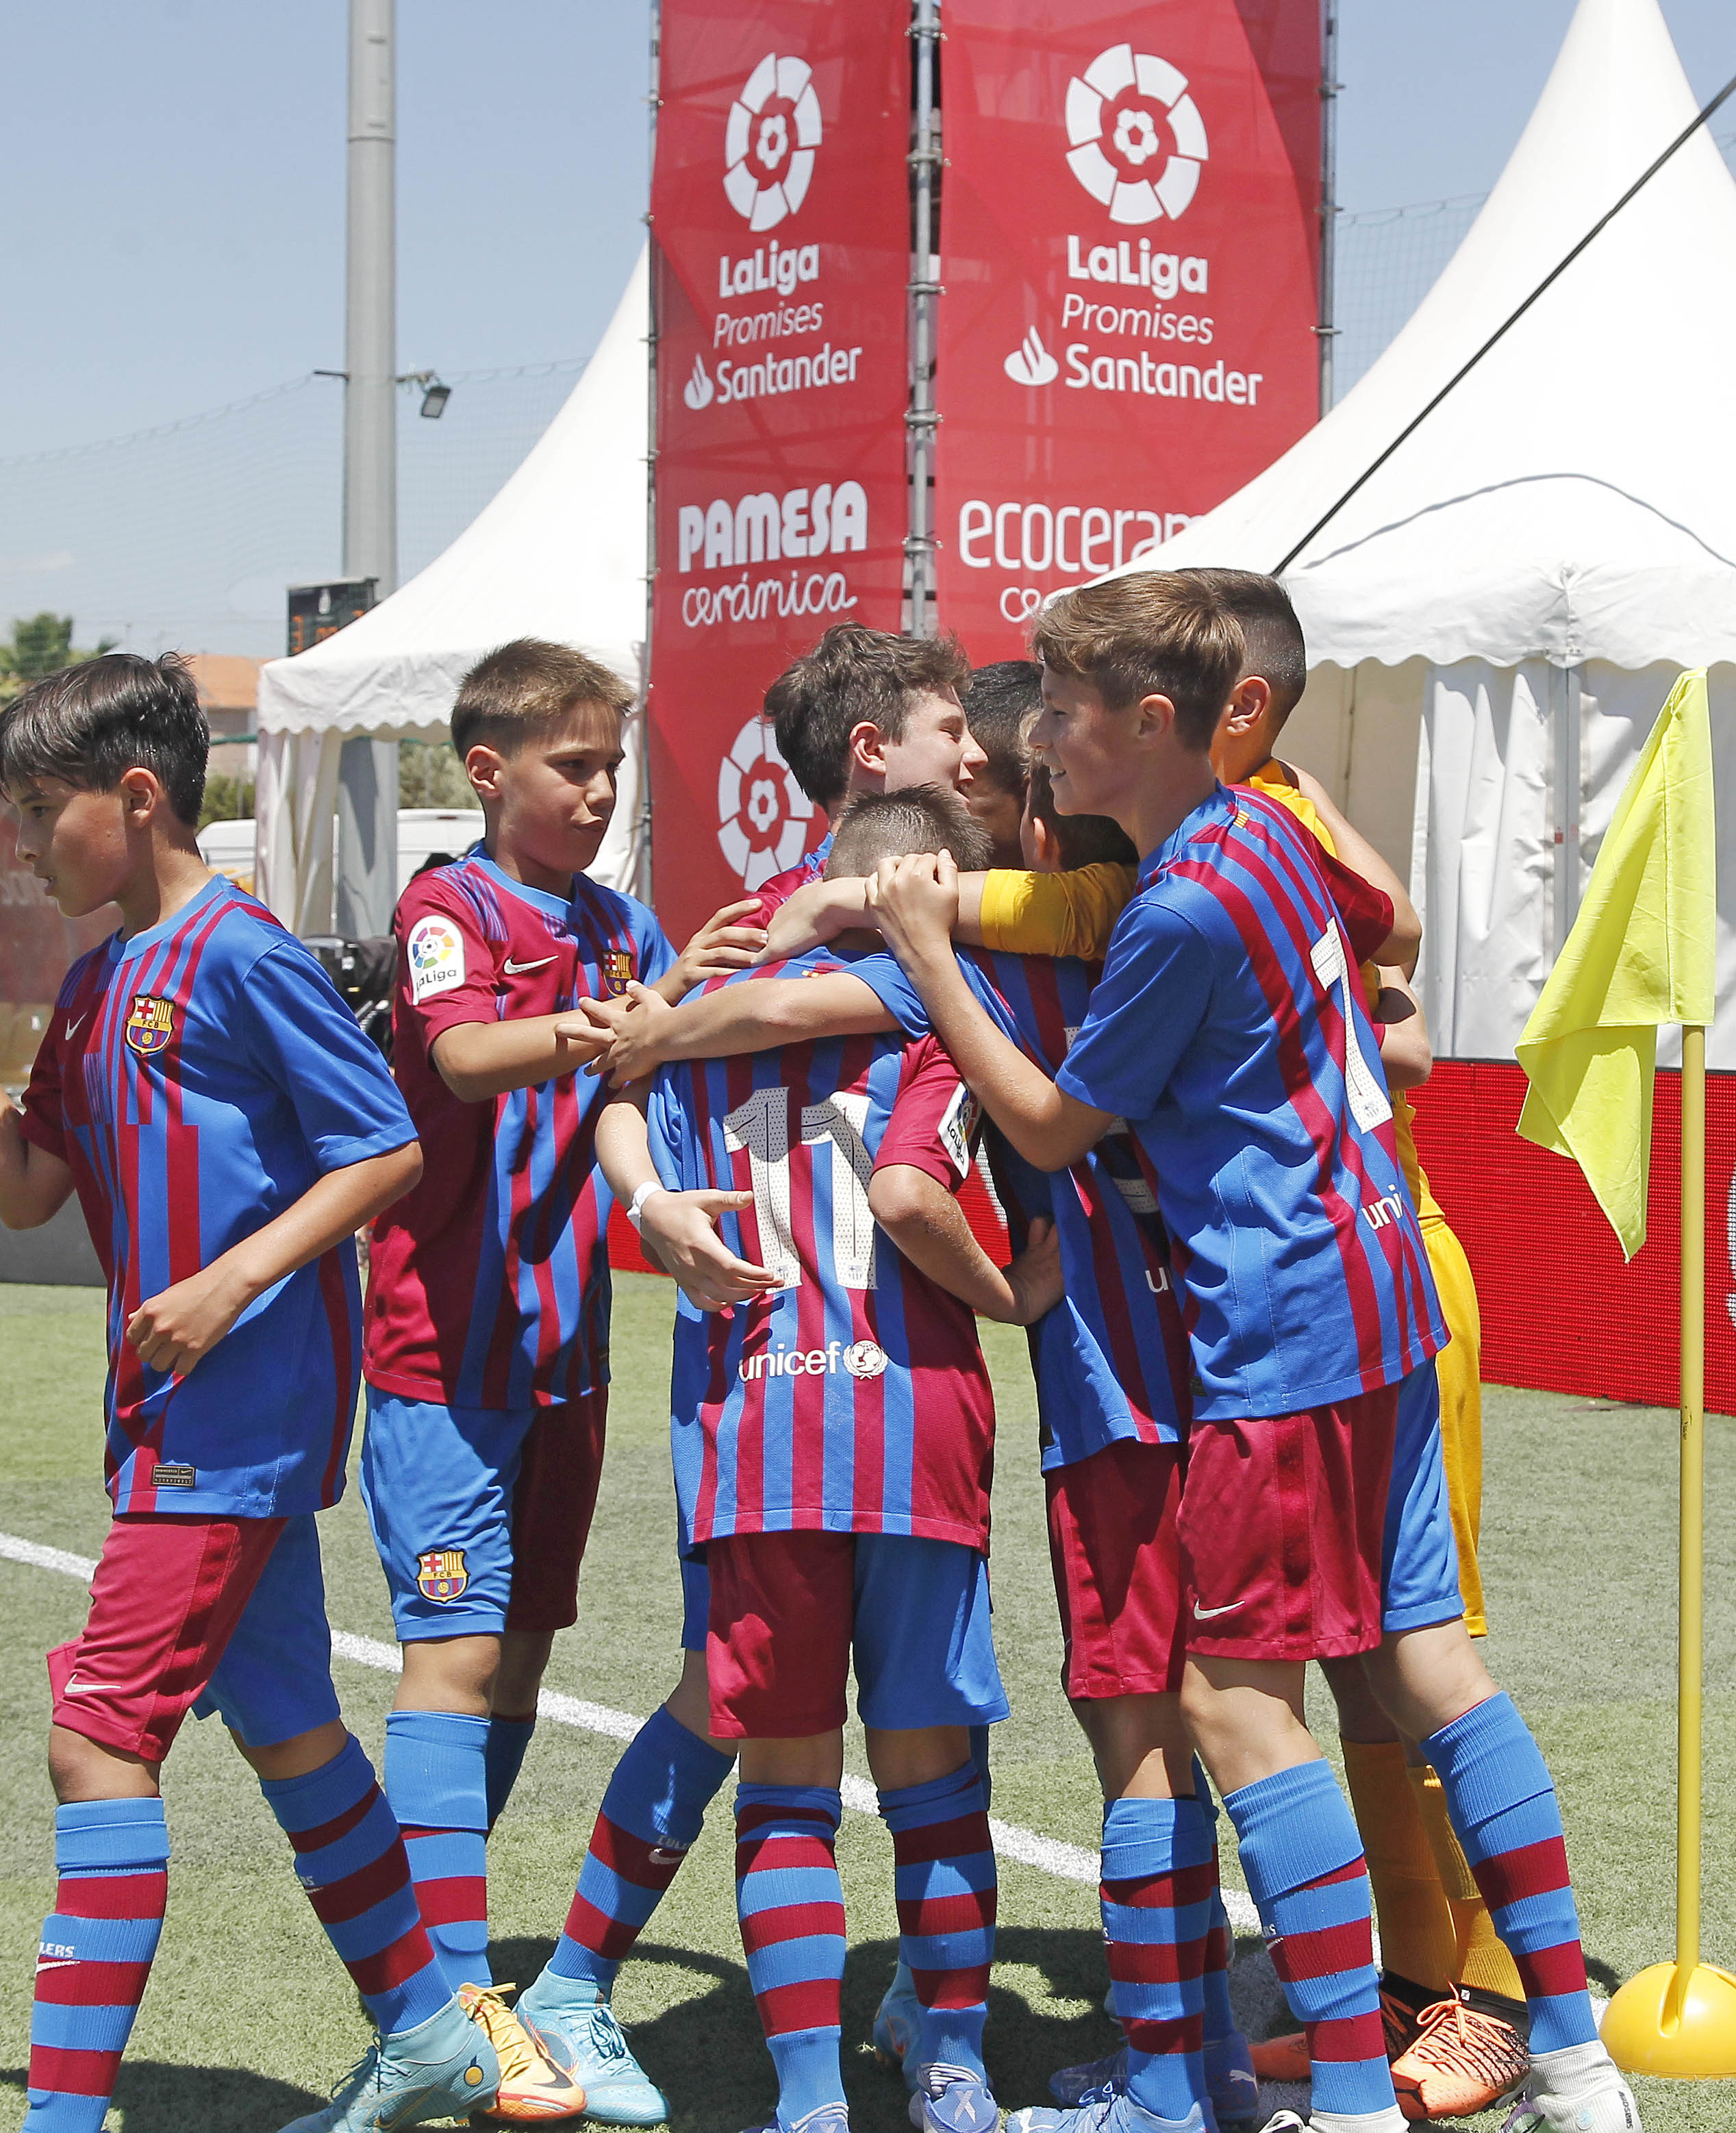 Barcelona win prestigious national youth tournament La Liga Promises